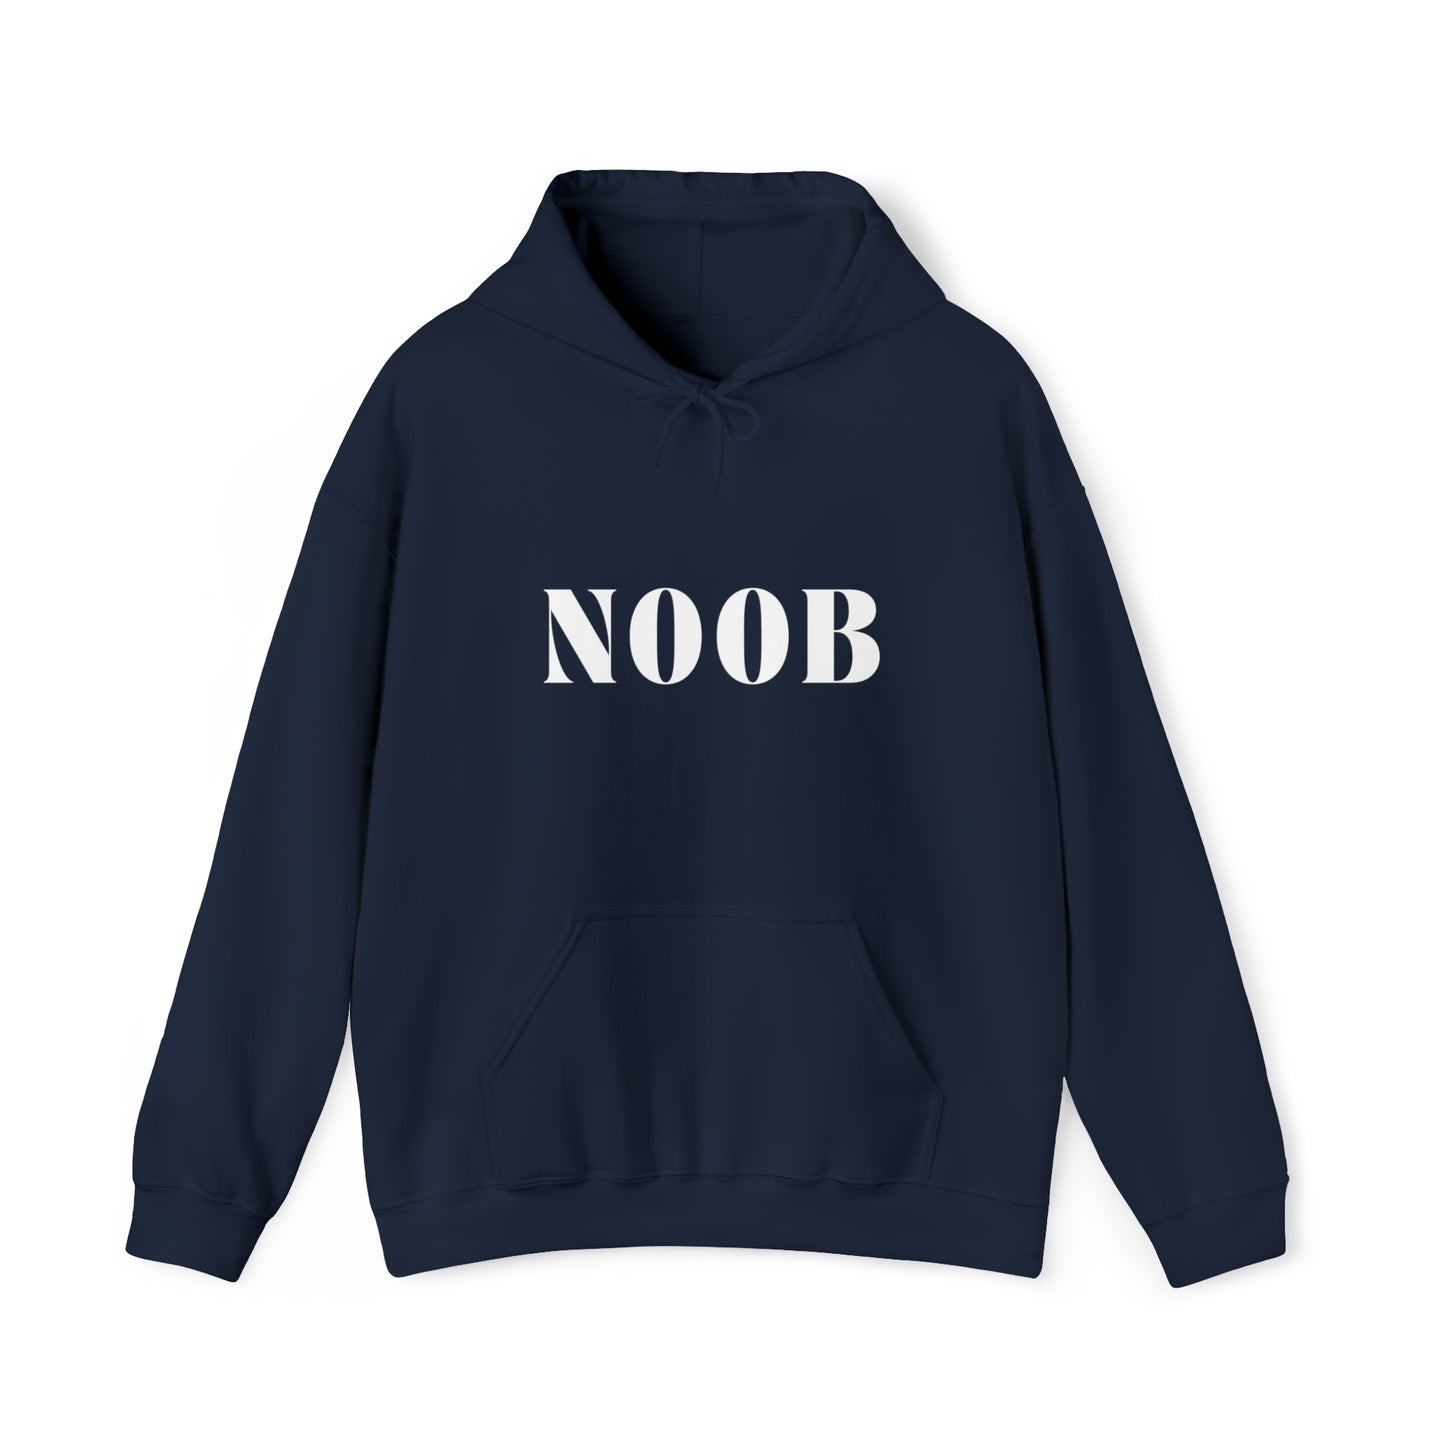 S Navy Noob Hoodie from HoodySZN.com